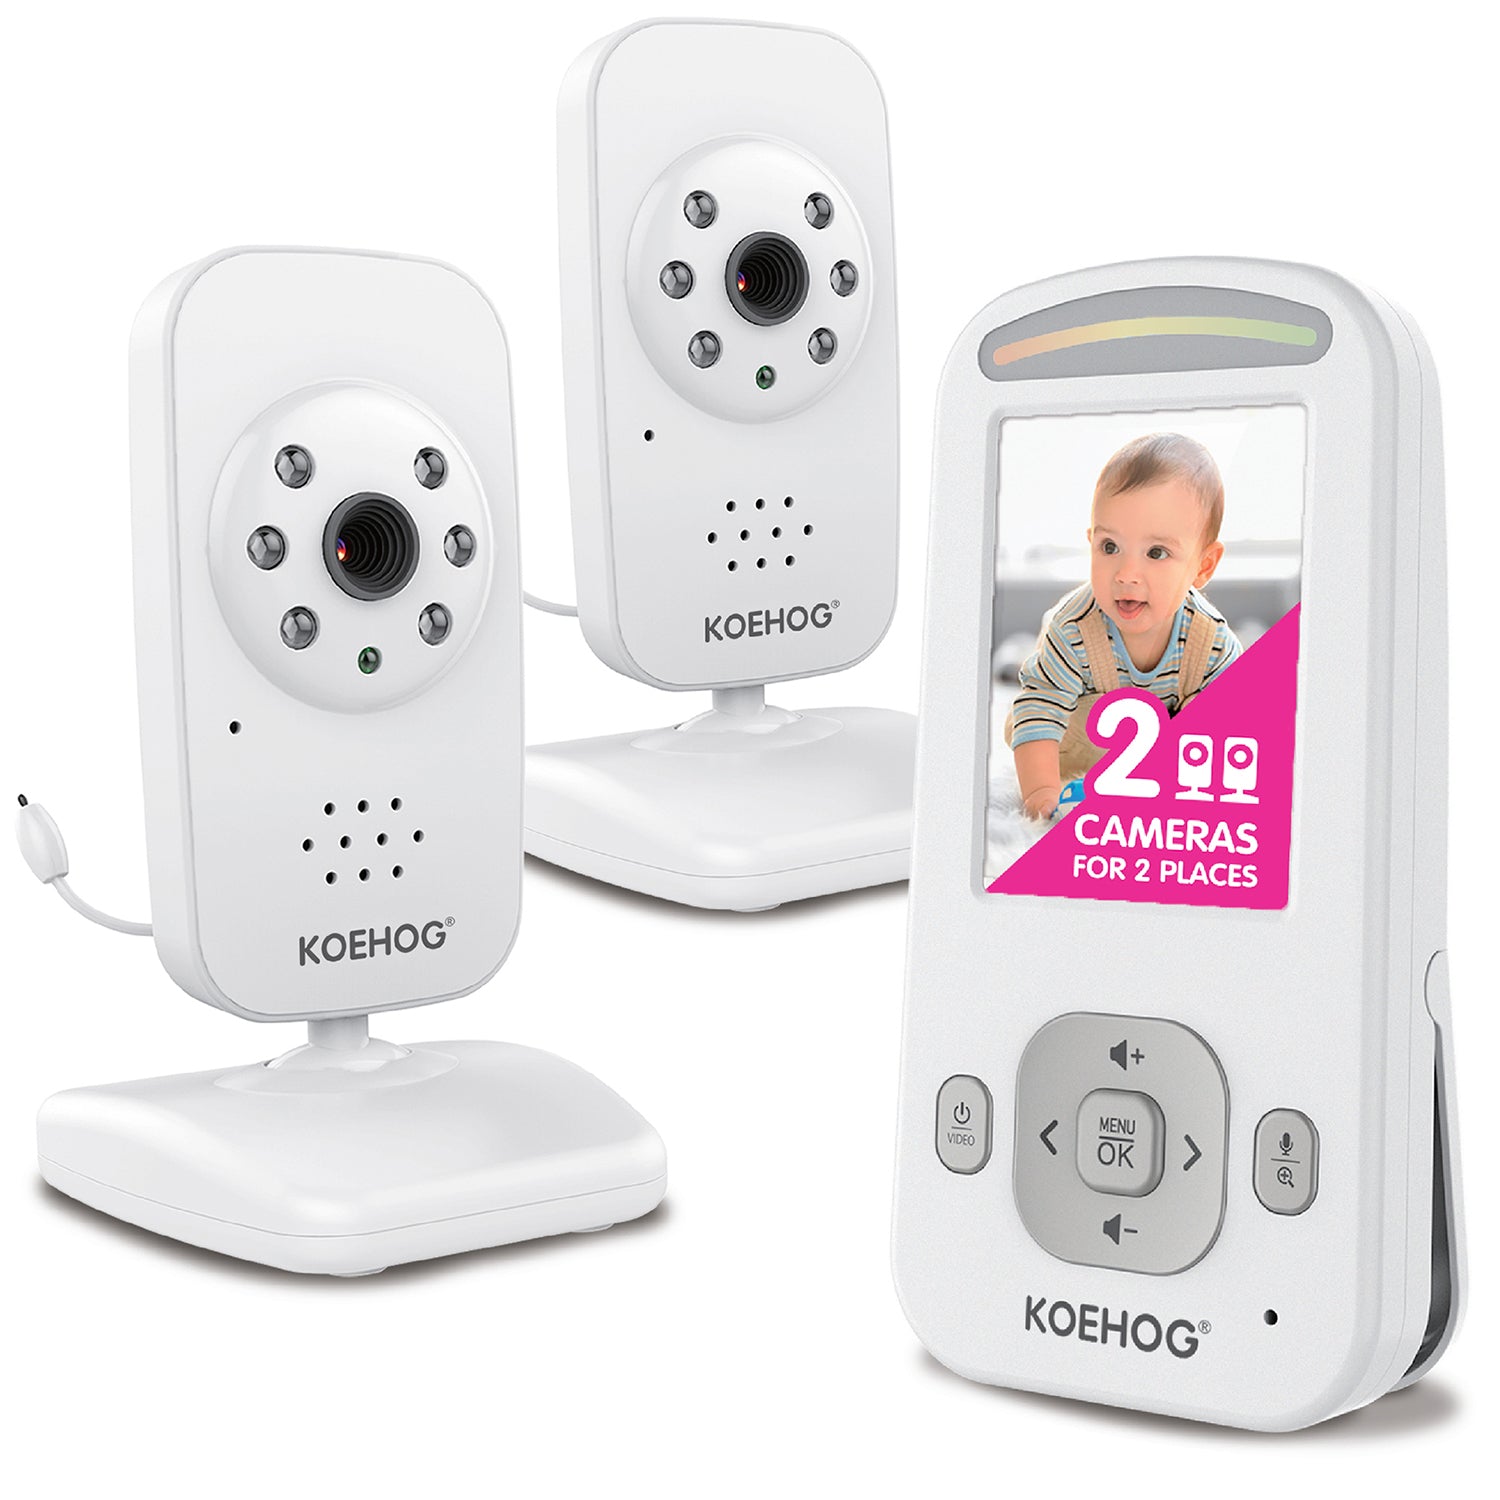 KOEHOG	E622 Video Baby Monitor